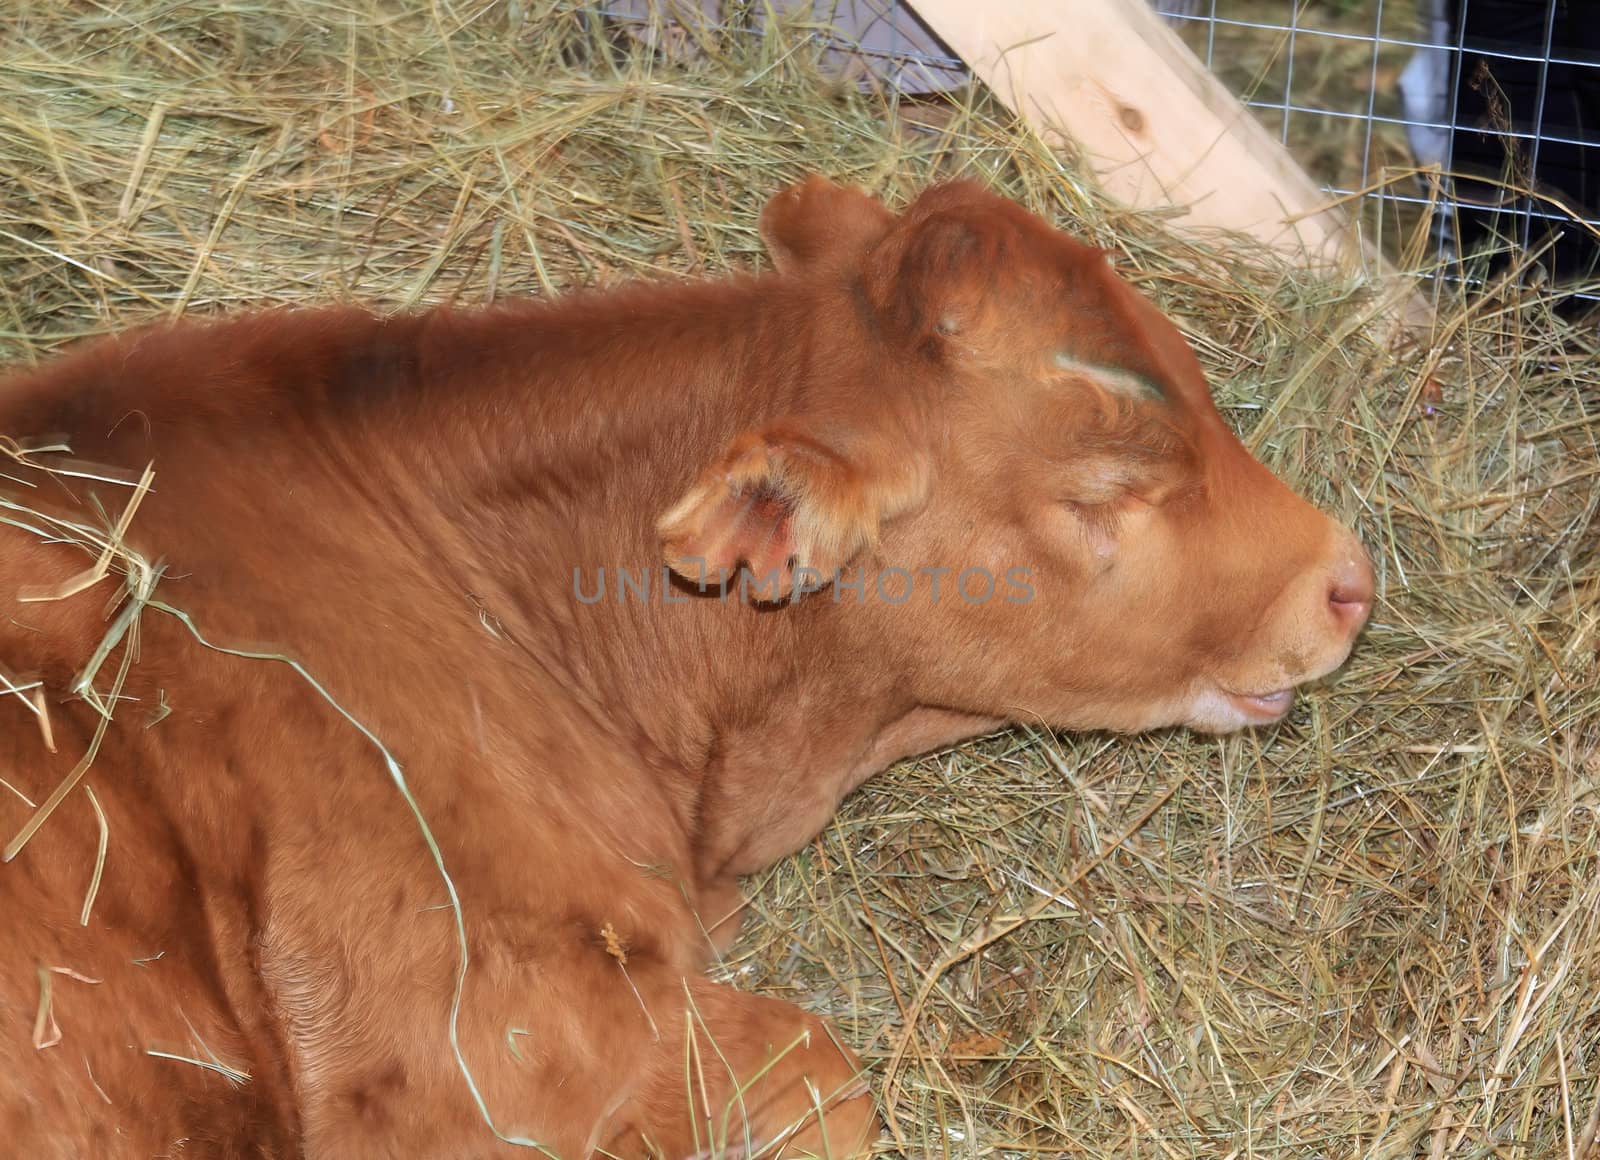 redhead calf on dry hay by basel101658